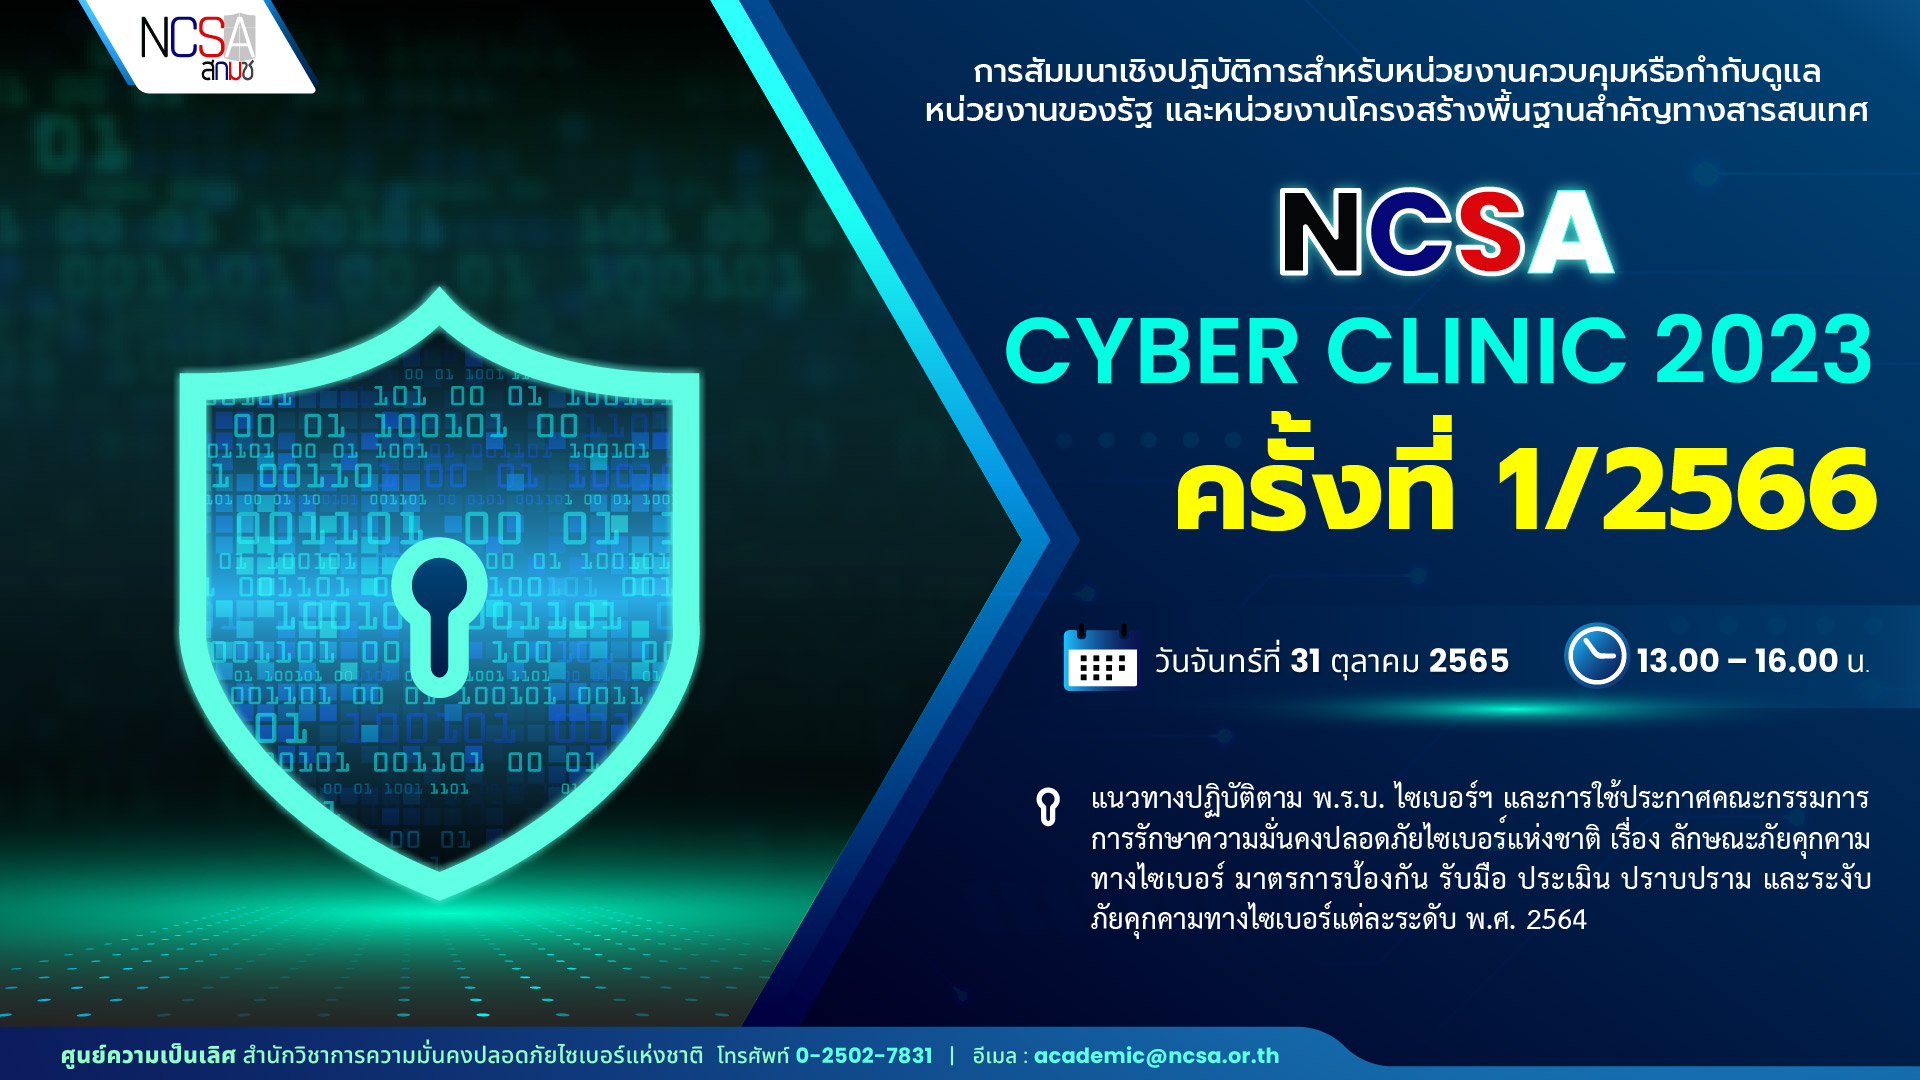 NCSA Cyber Clinic 2023 ครั้งที่ 1/2566